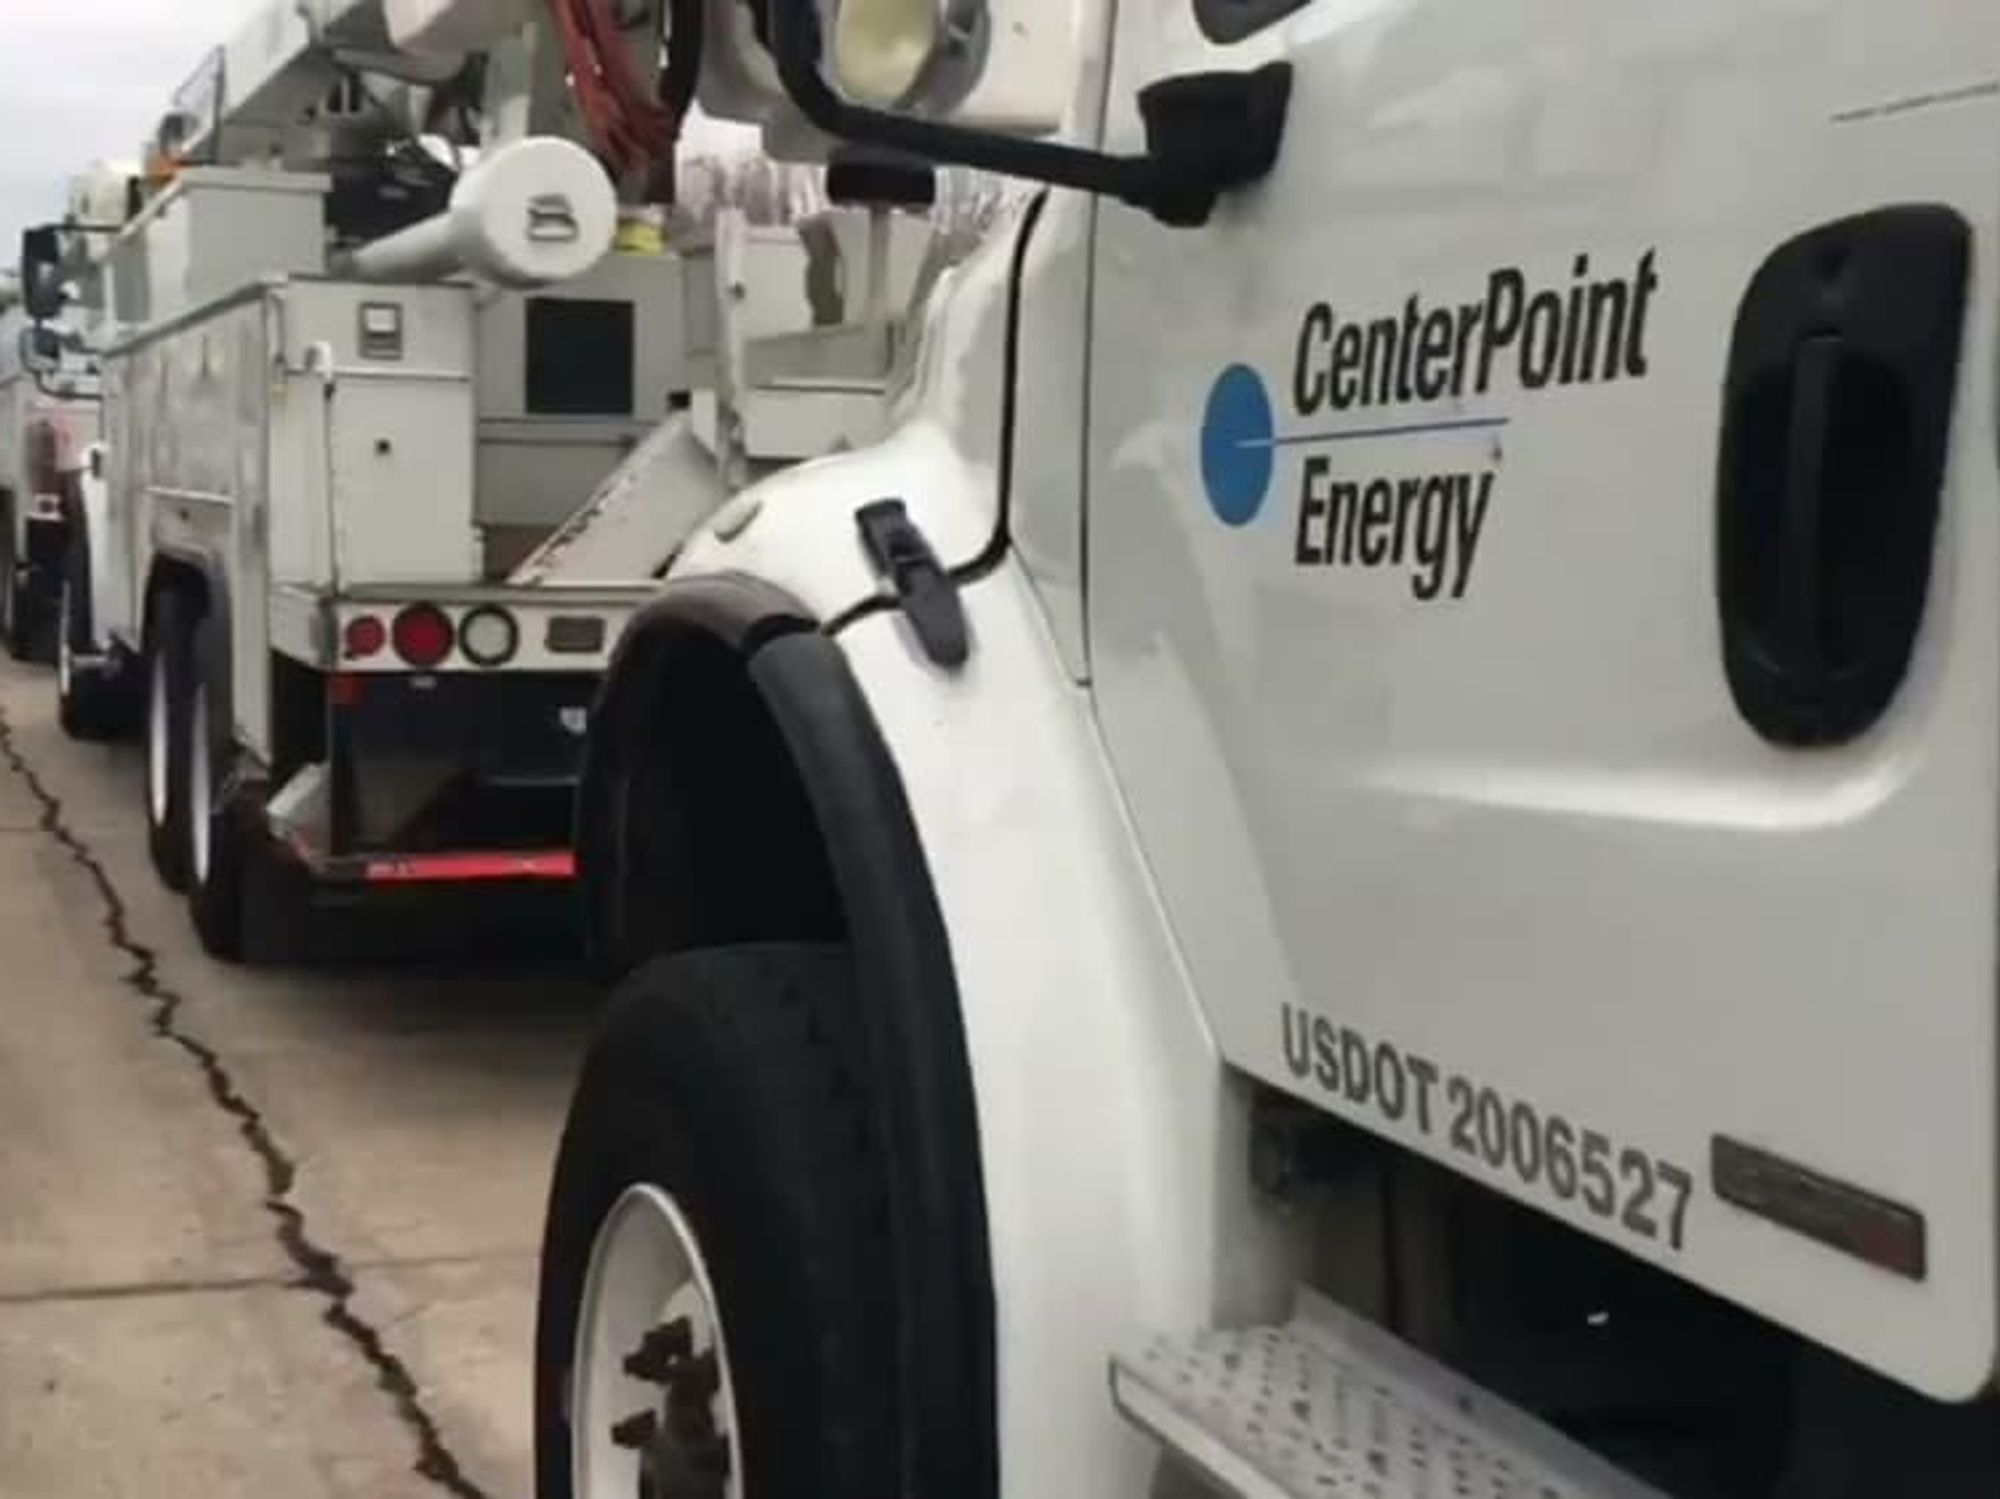 Centerpoint Energy truck